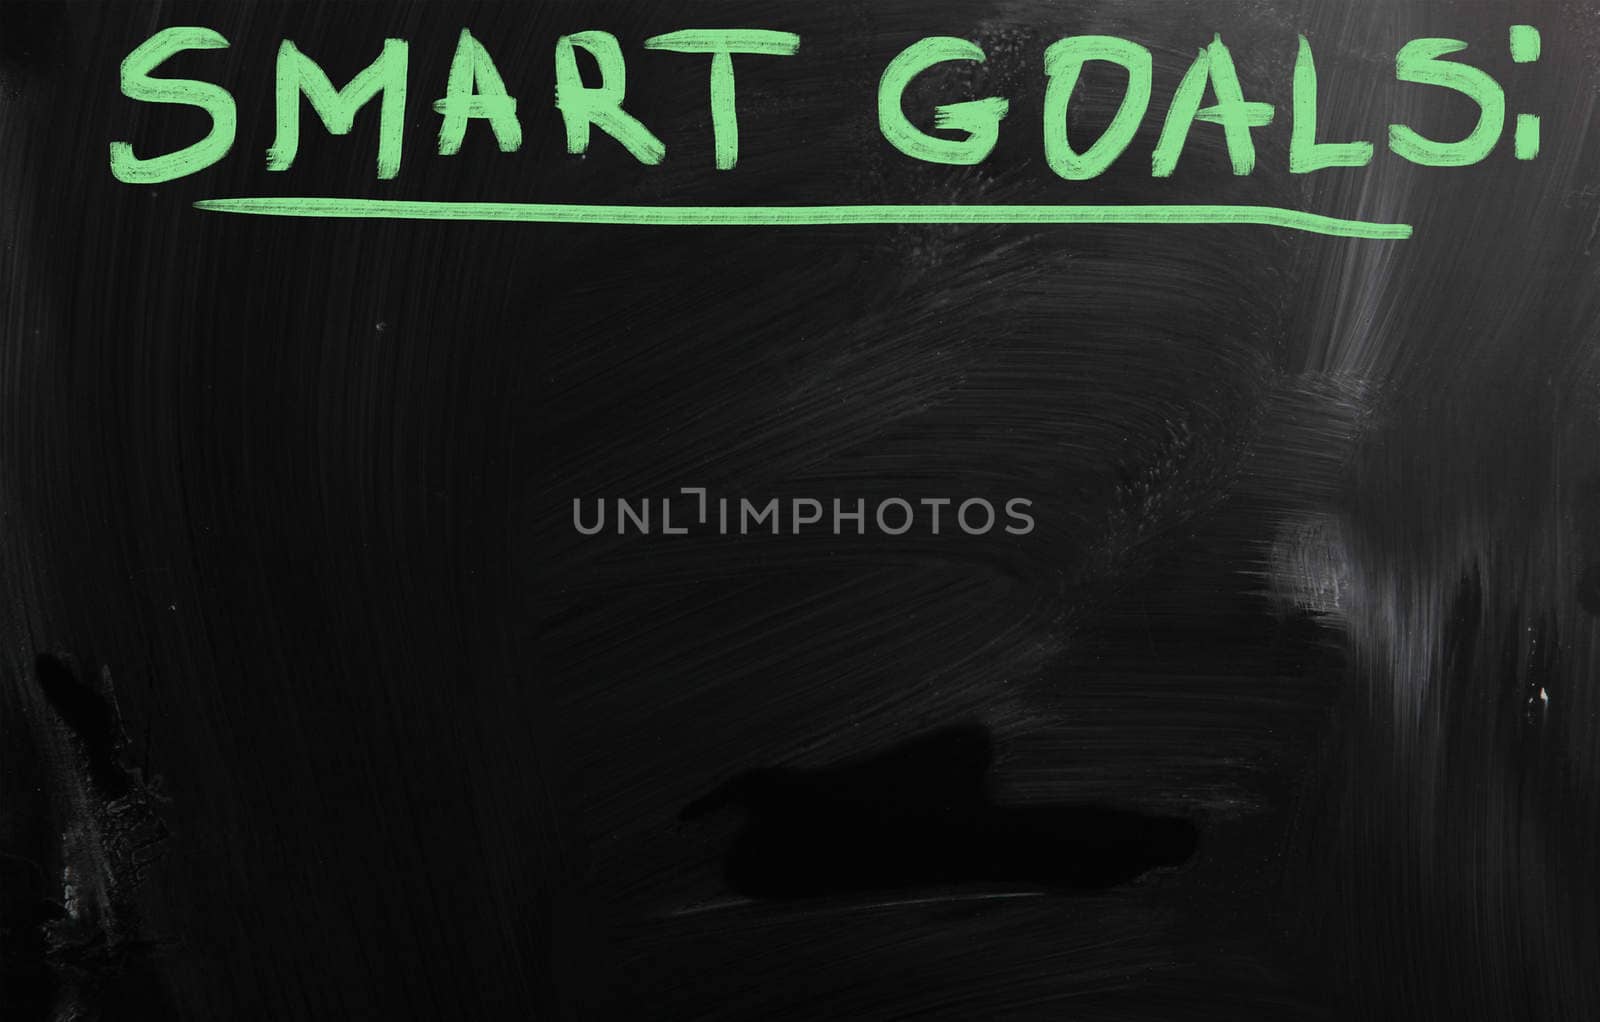 "Smart goals" handwritten with white chalk on a blackboard